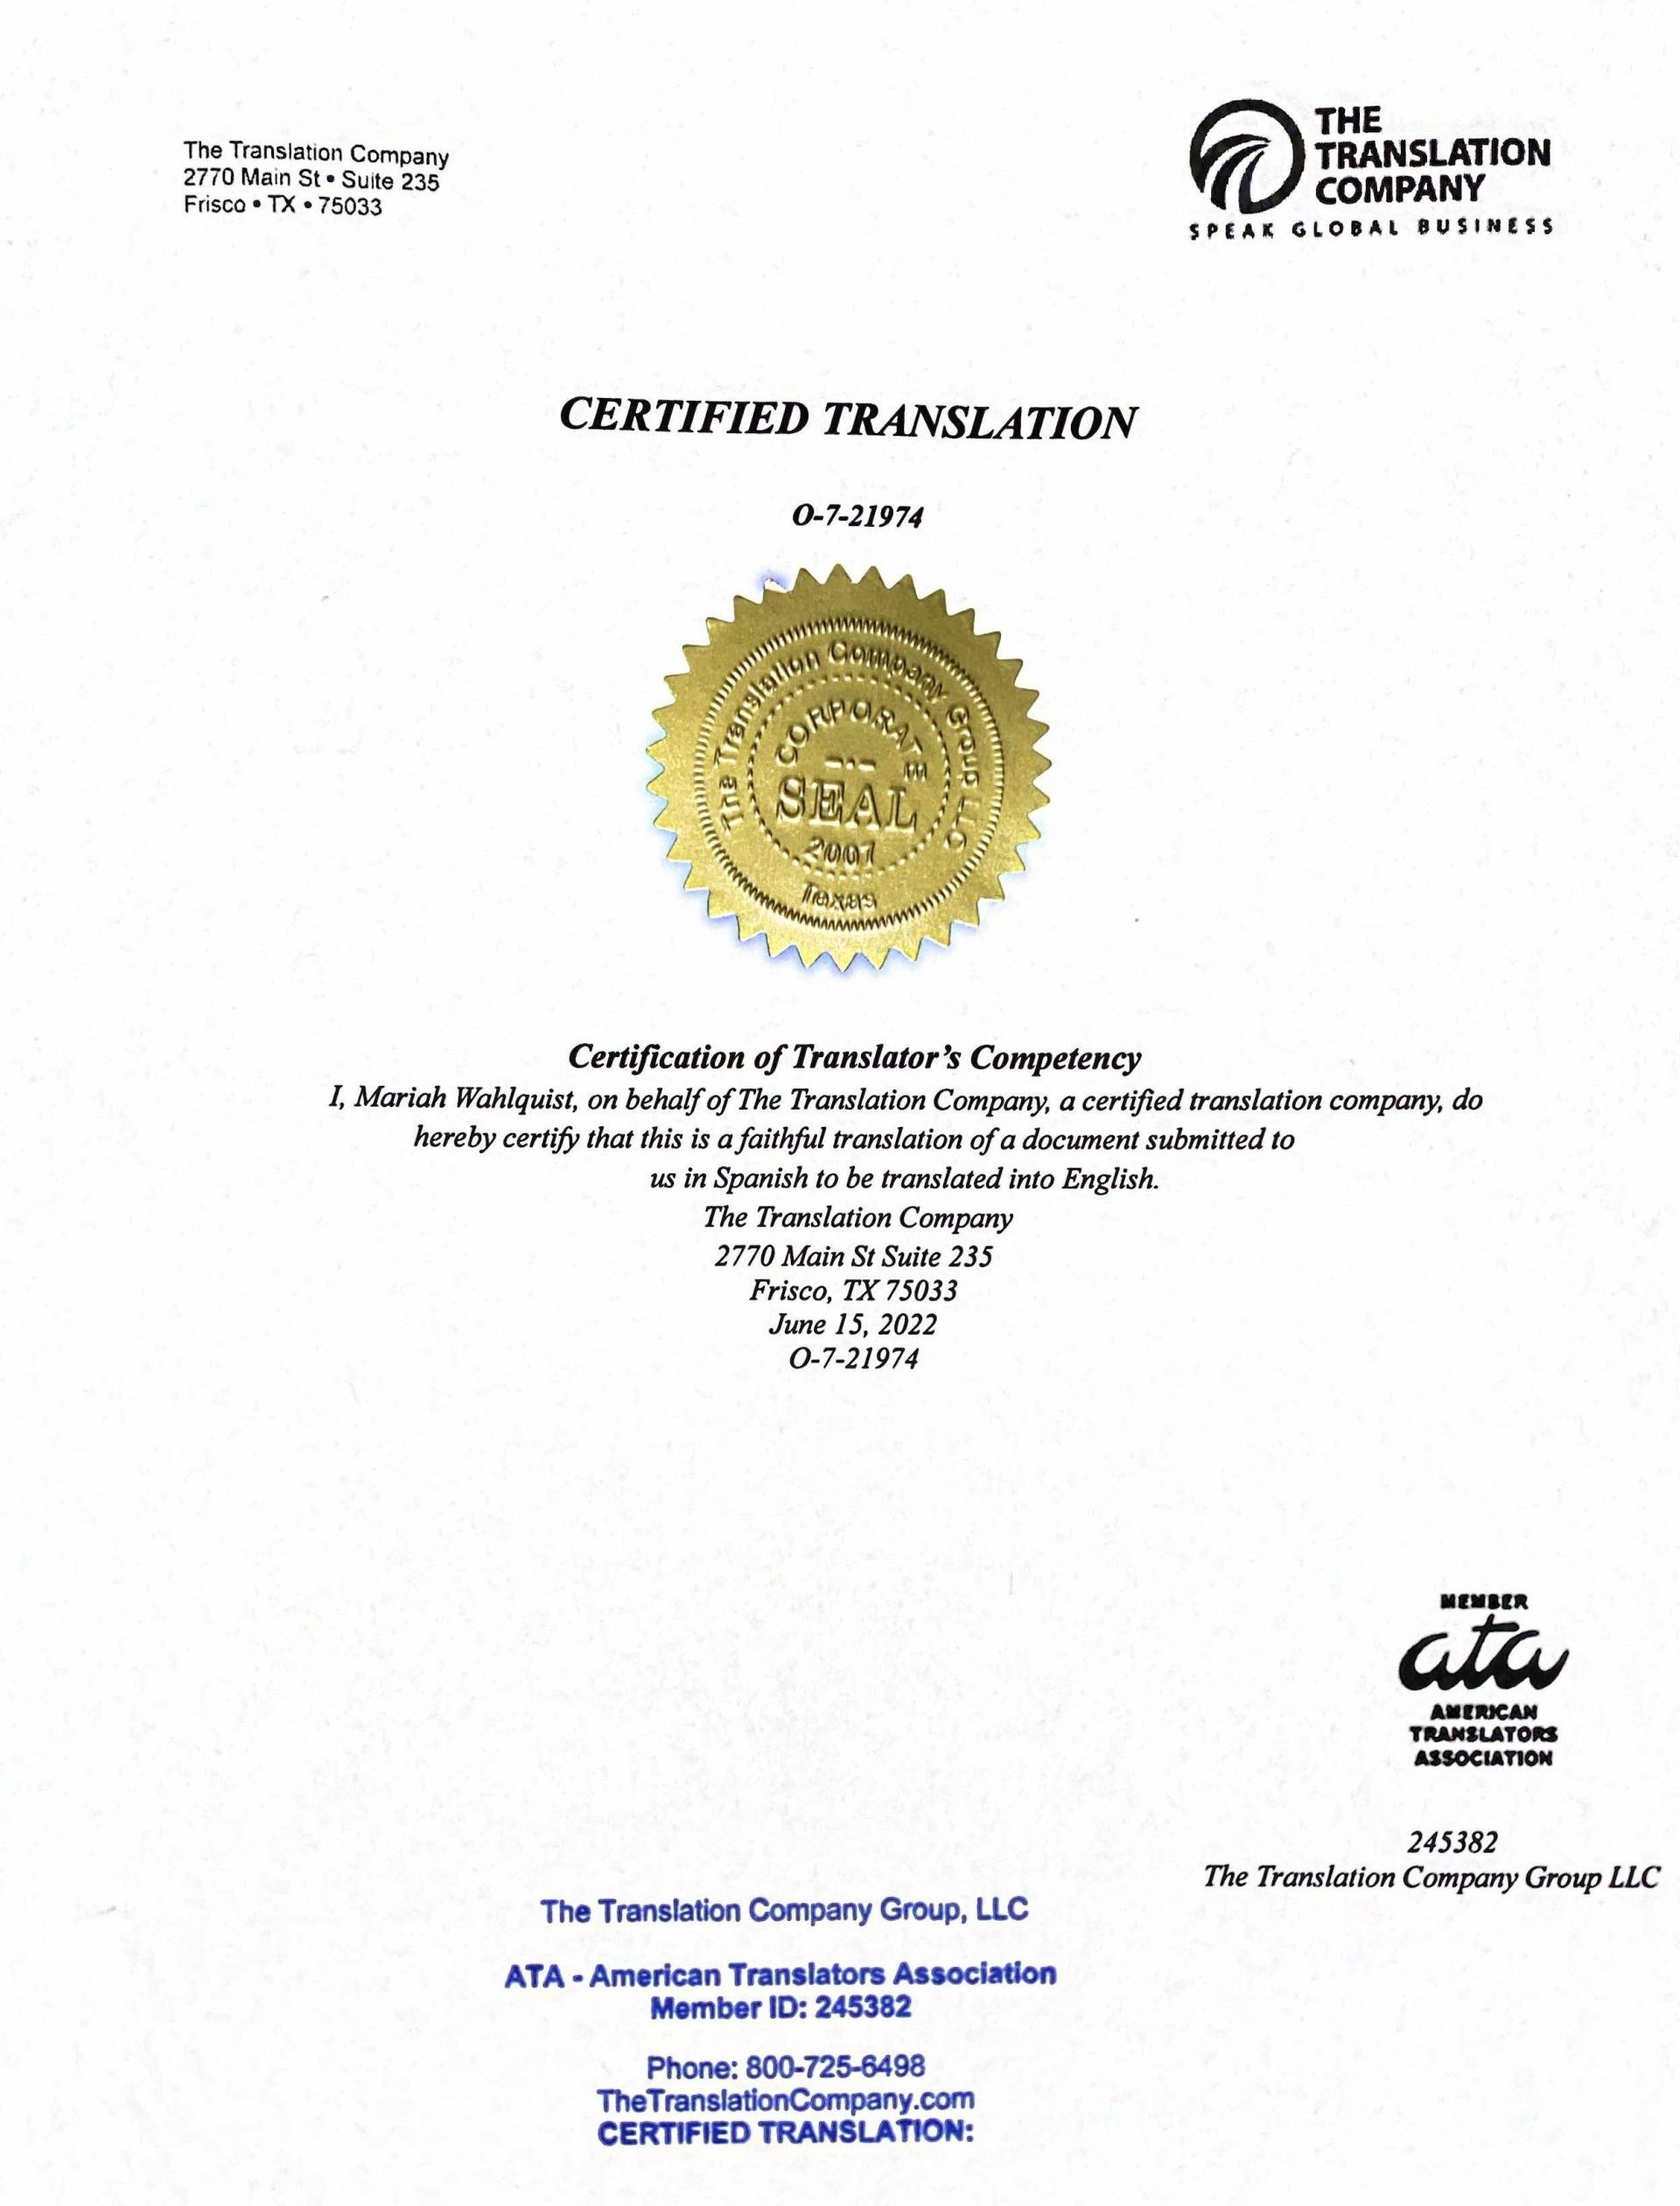 Certified Spanish Translation from The Translation Company